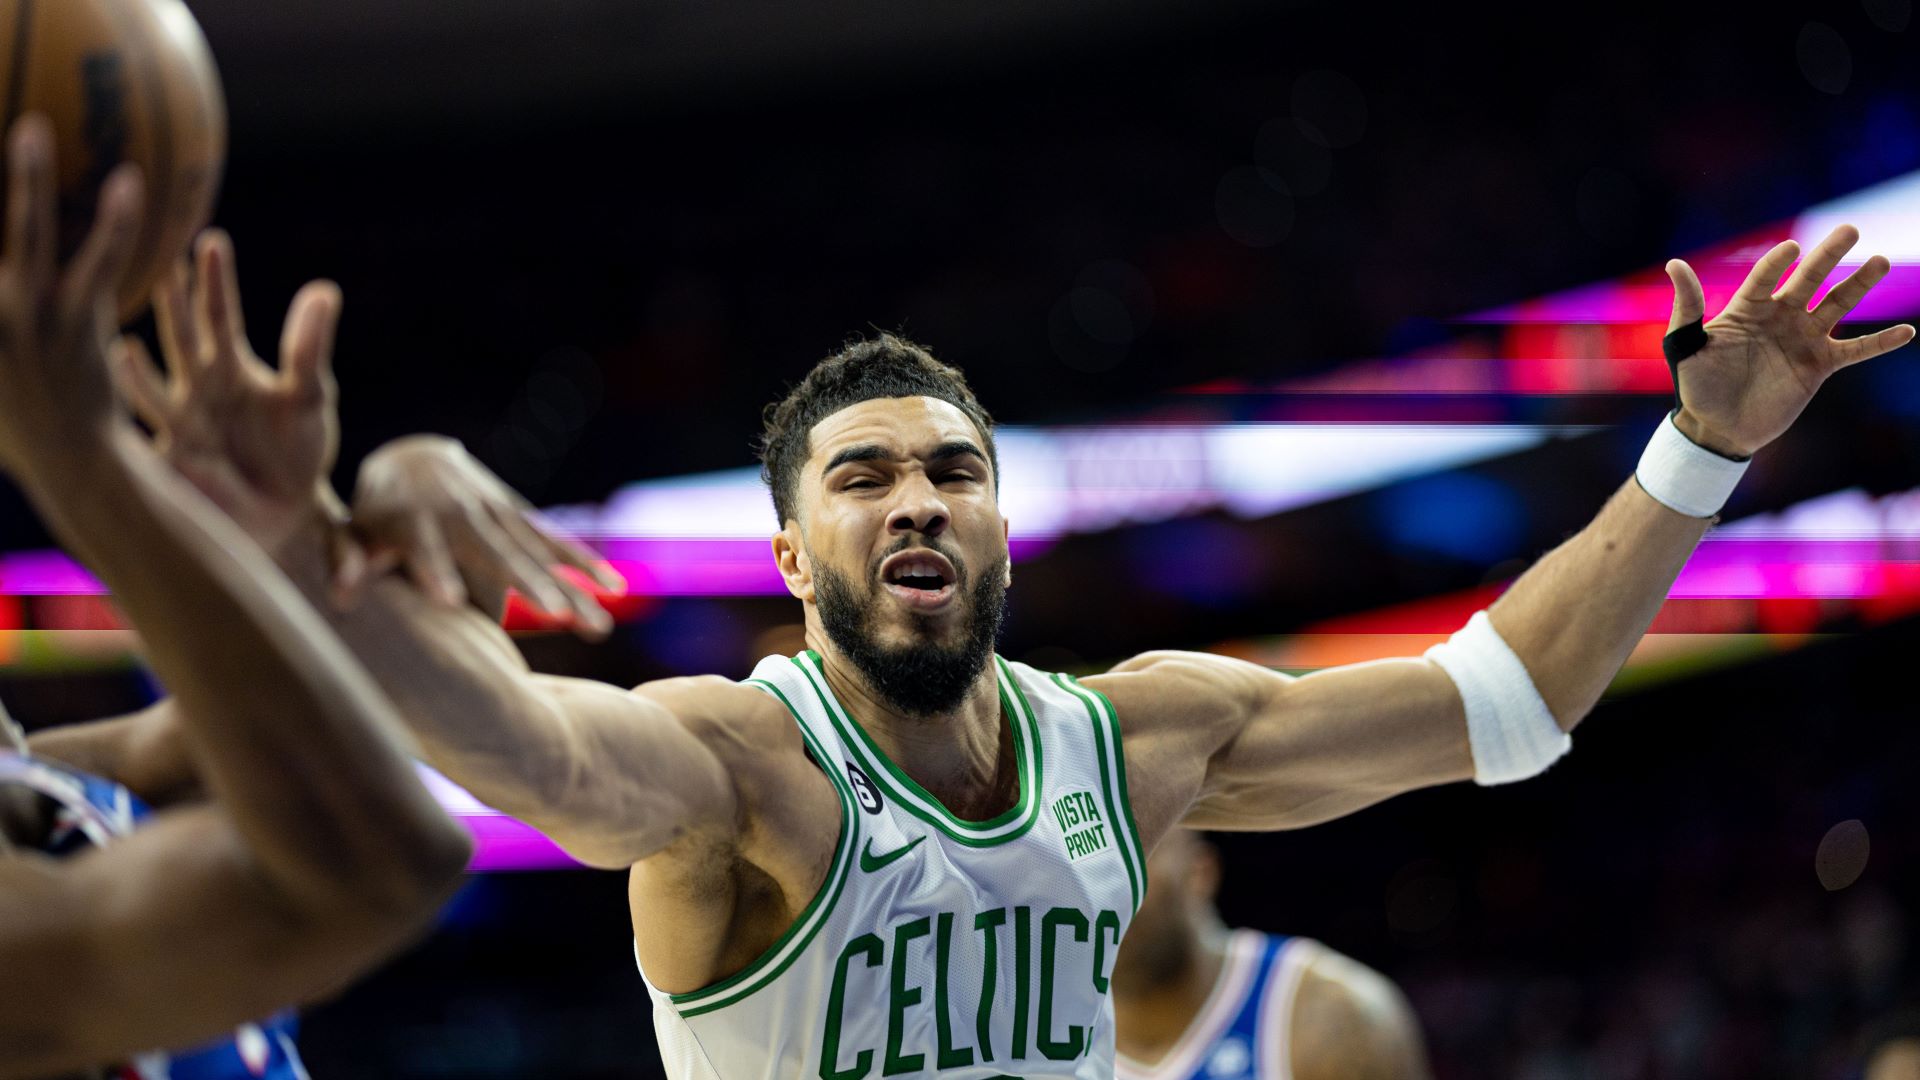 Celtics hope to avoid Bruins' fate, reach finals